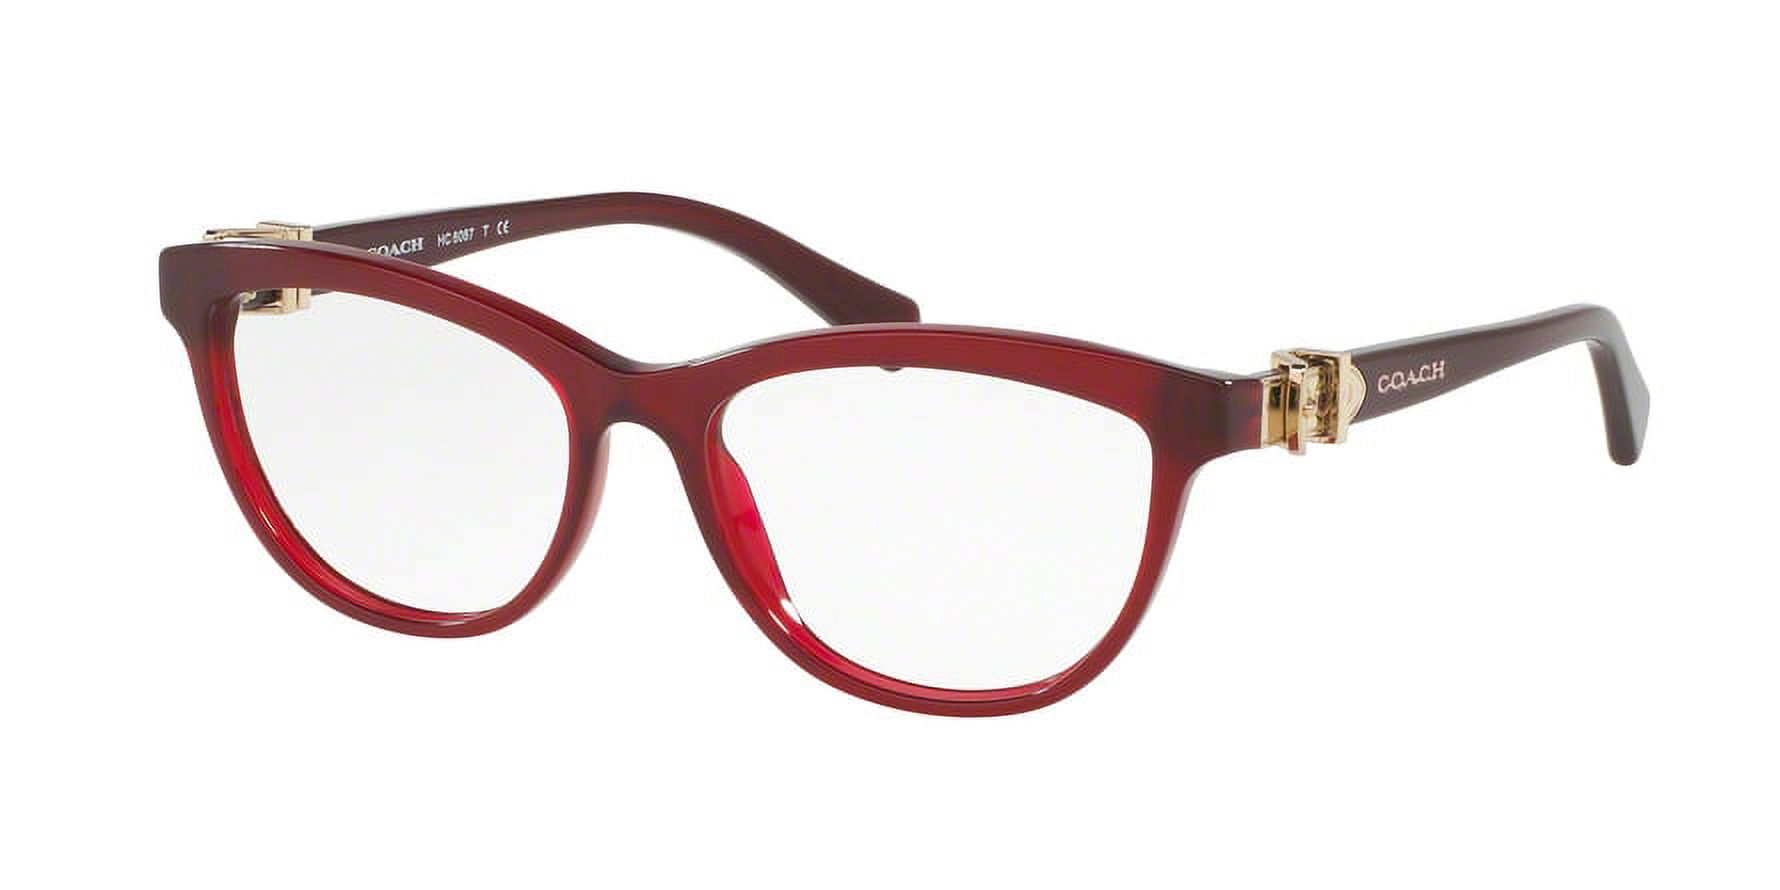 Coach 0HC6087 Optical Full Rim Cat Eye Womens Eyeglasses - Size 53 (Burgundy / Transparent) - image 1 of 3